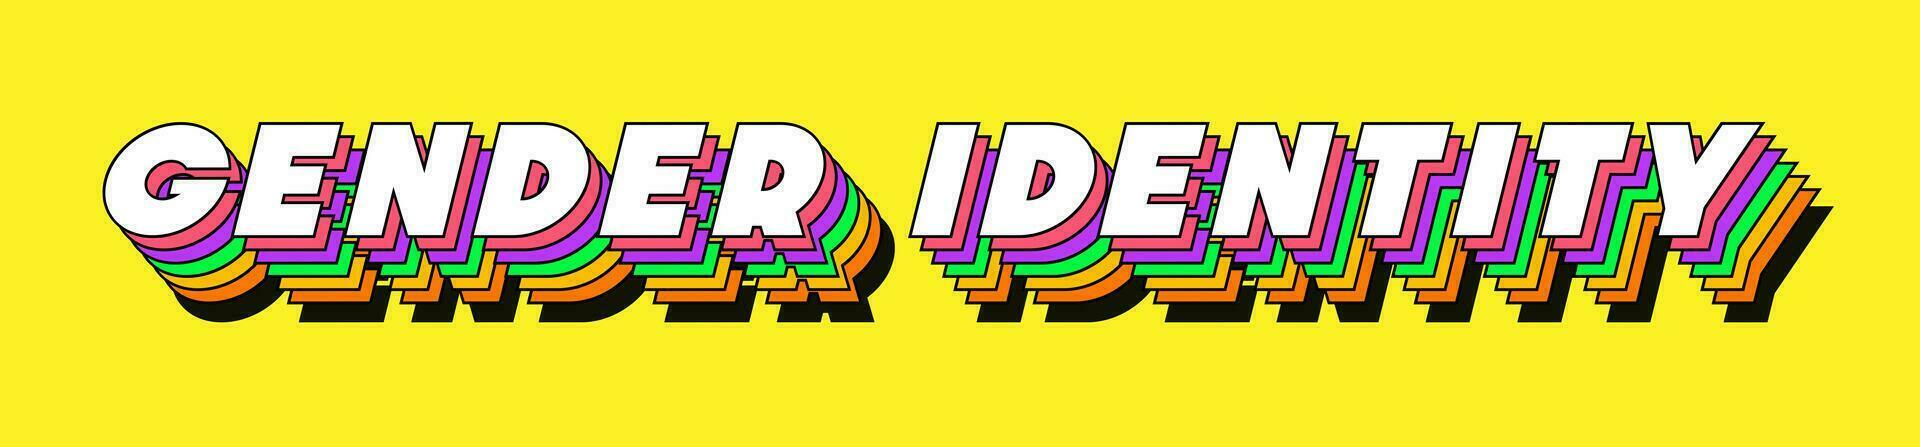 Gender identity phrase modern typography vector